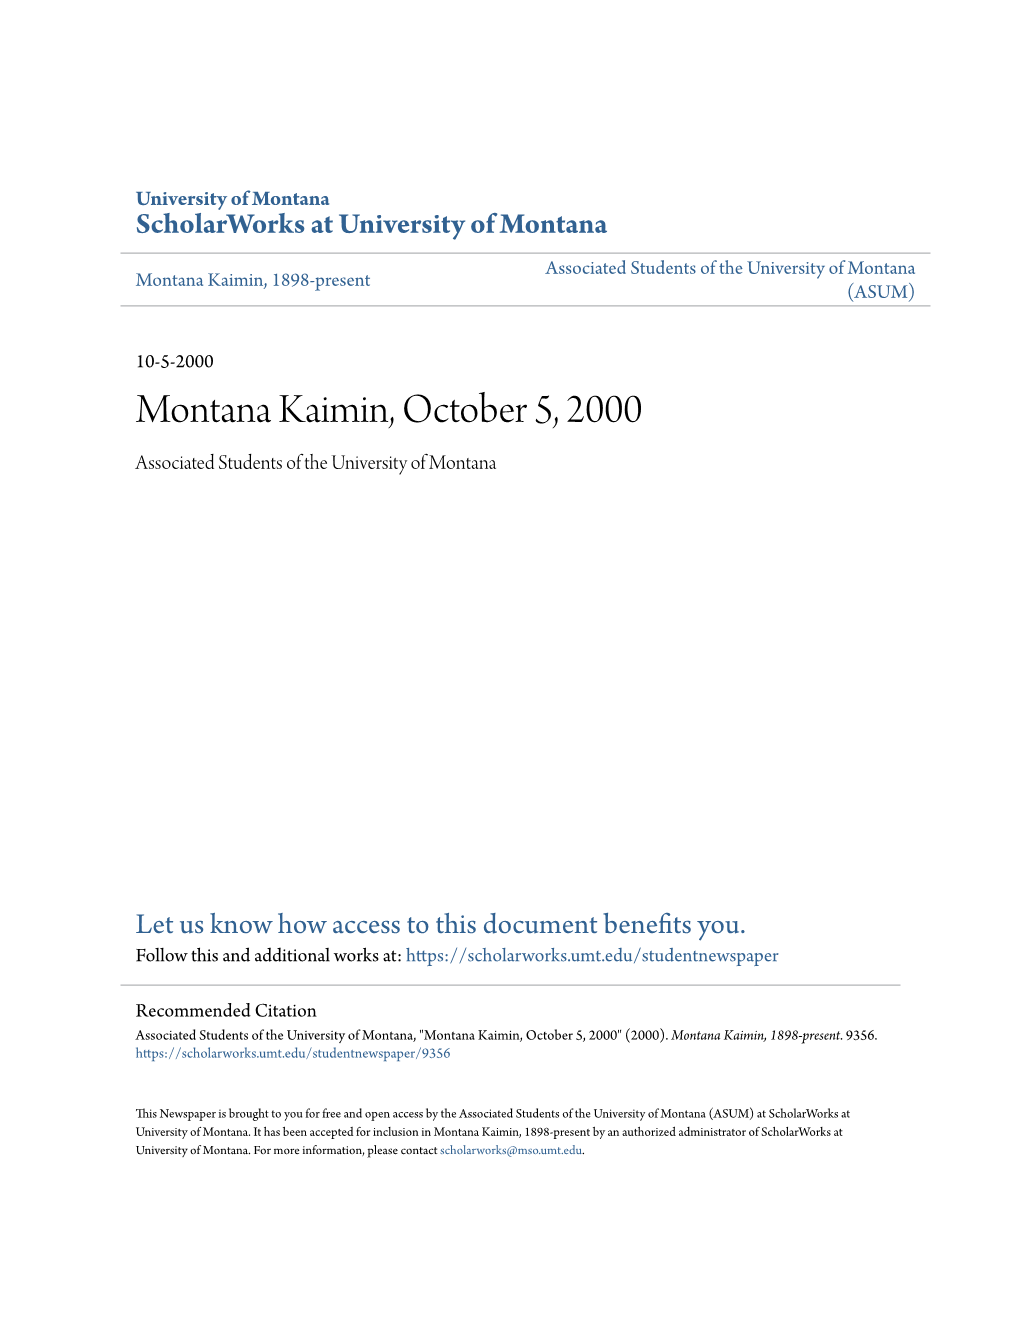 Montana Kaimin, October 5, 2000 Associated Students of the University of Montana